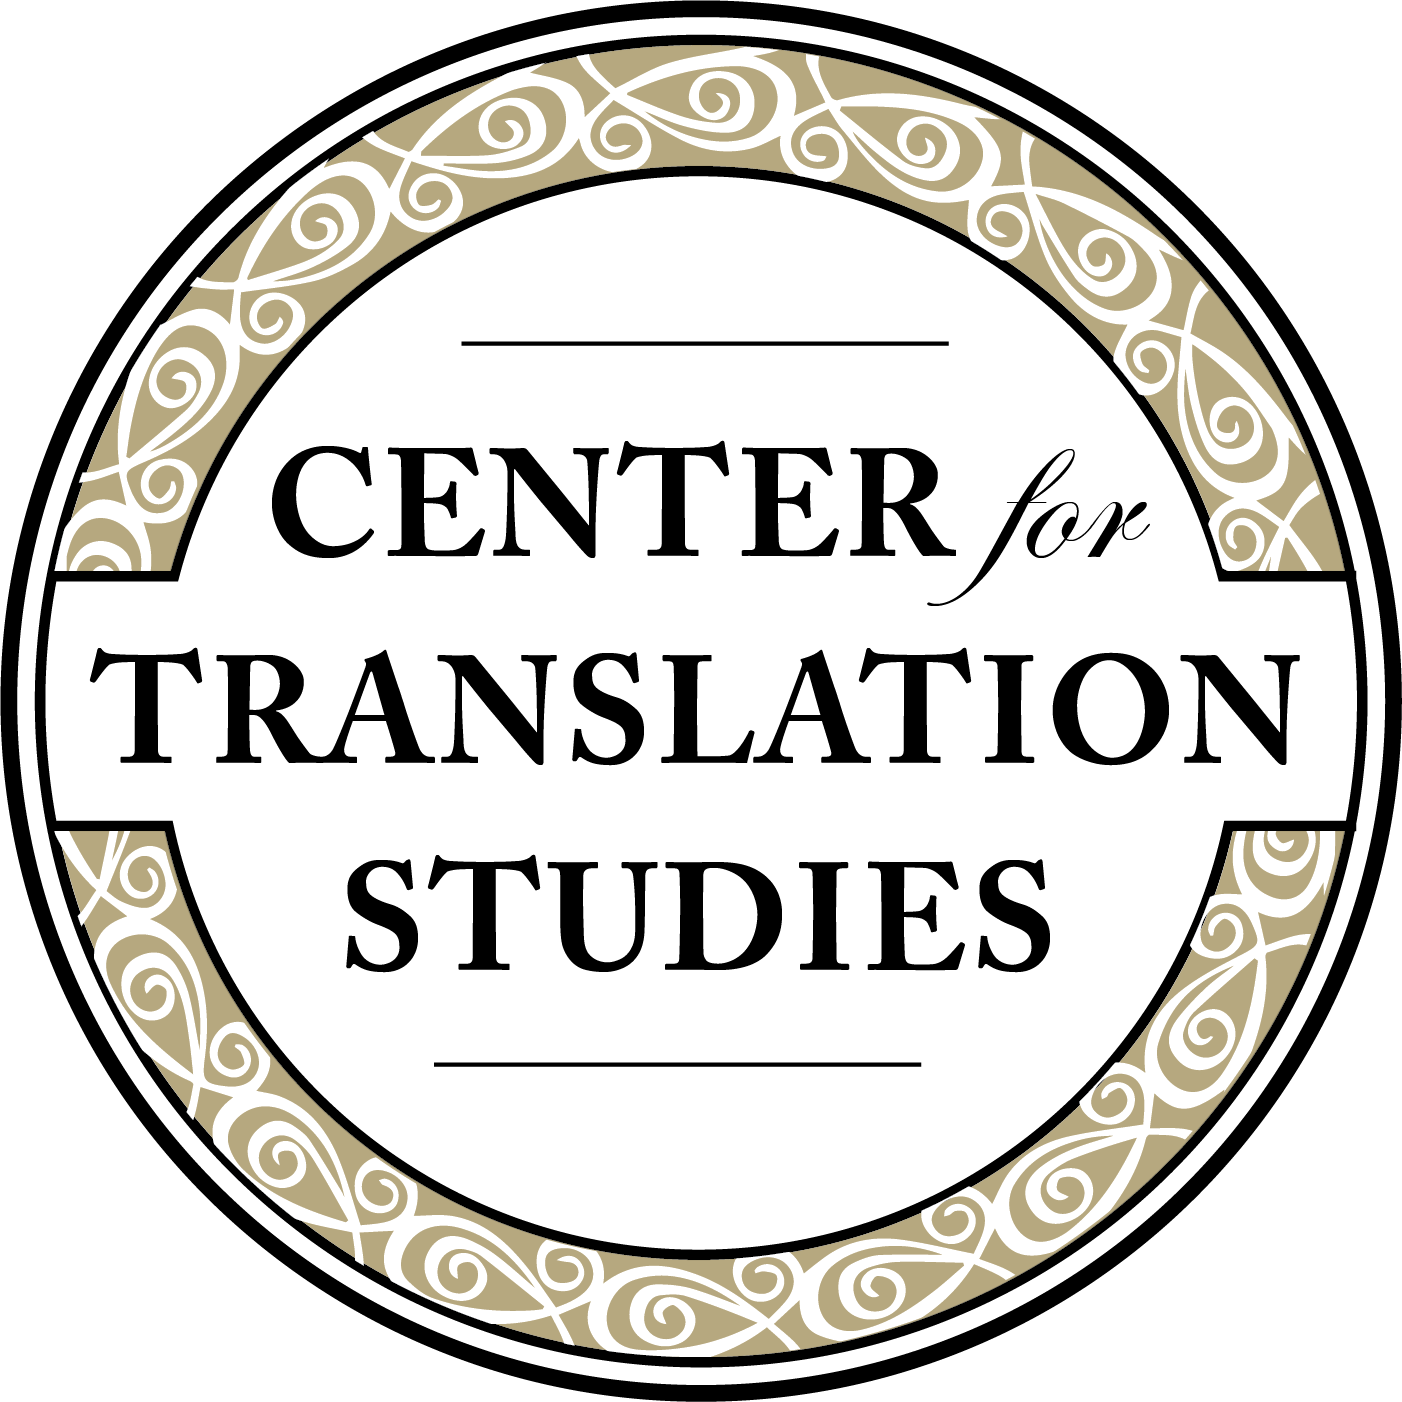 Center for Translation Studies